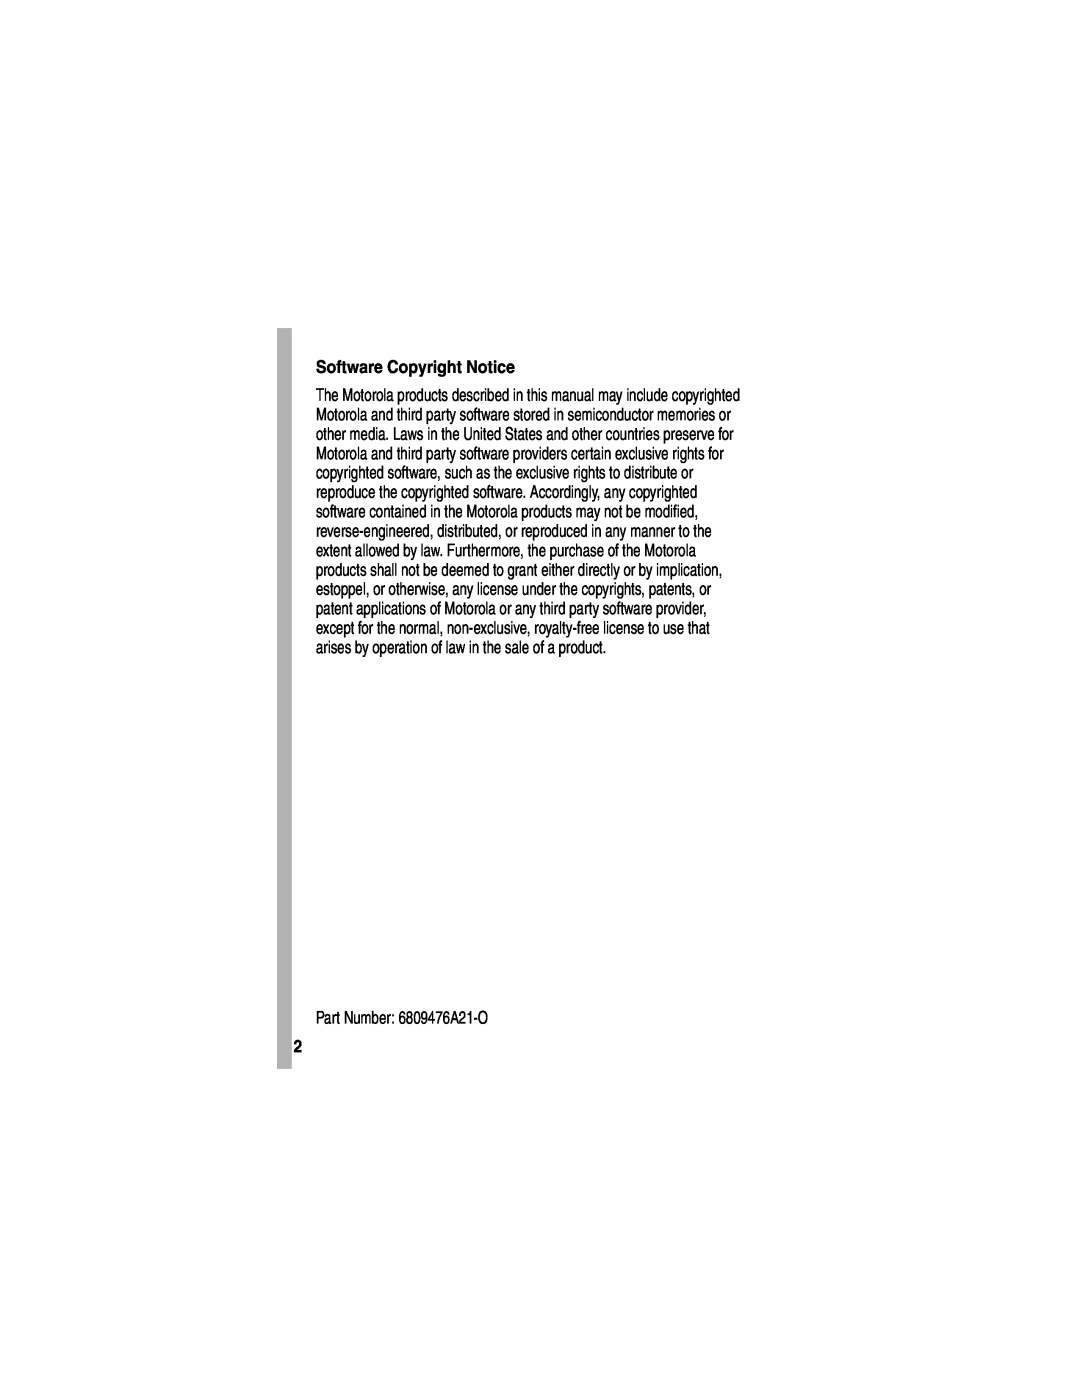 Motorola V555 manual Software Copyright Notice, Part Number 6809476A21-O 